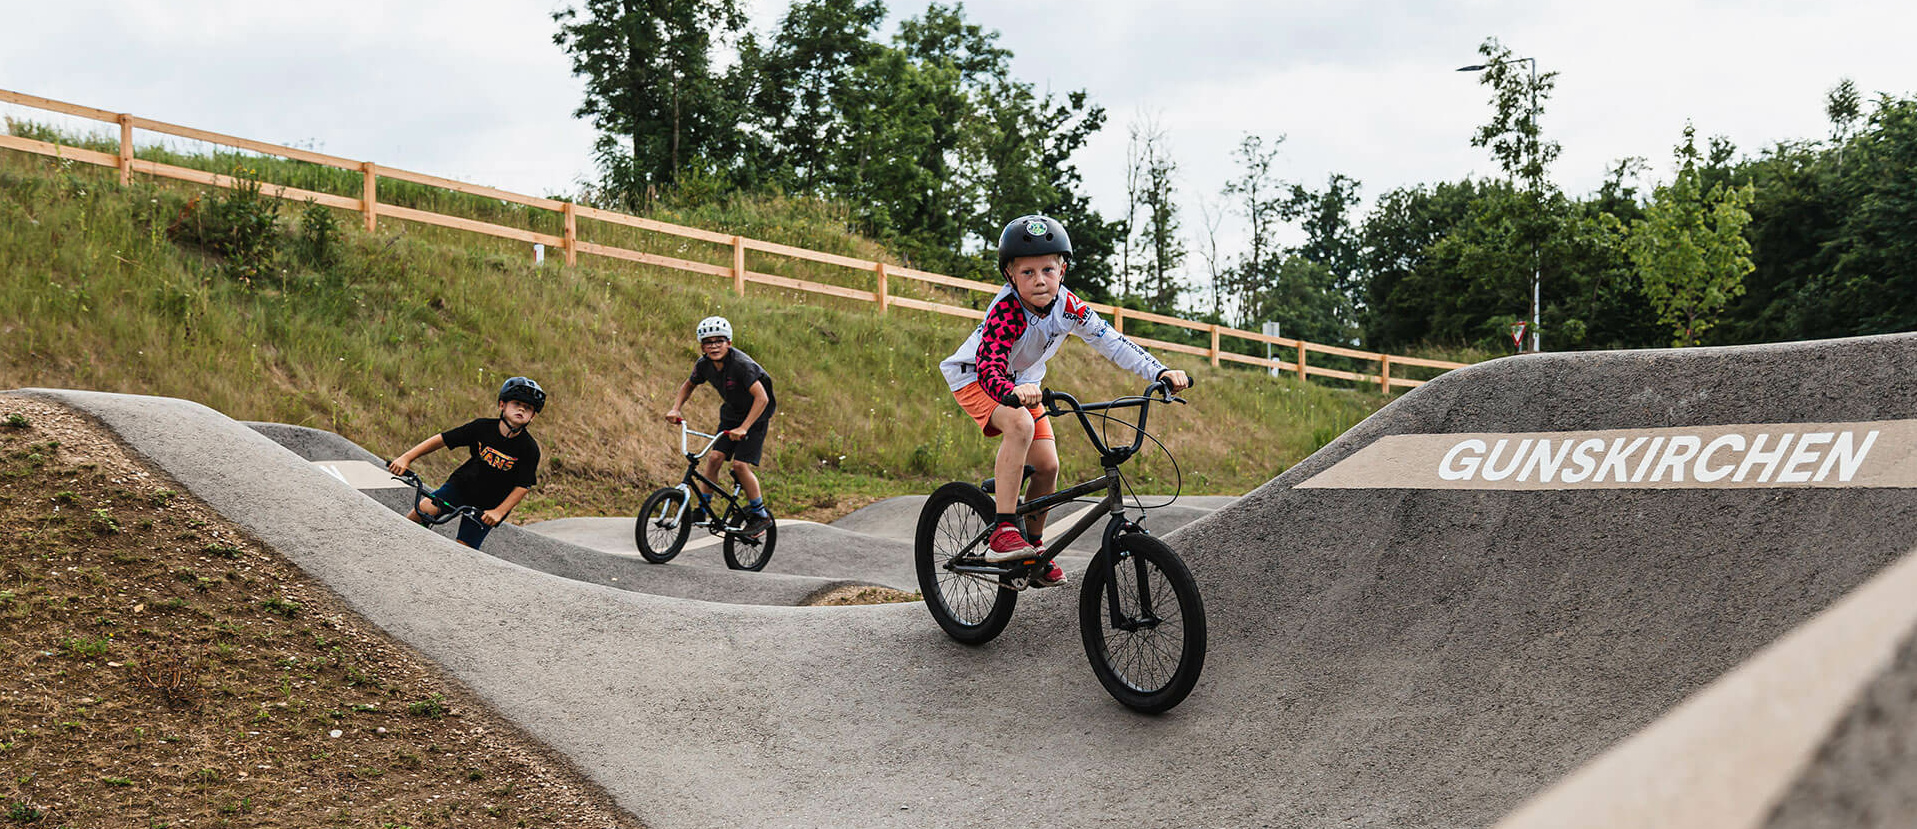 Three young boys ride their bike on pump track Gunskrichen